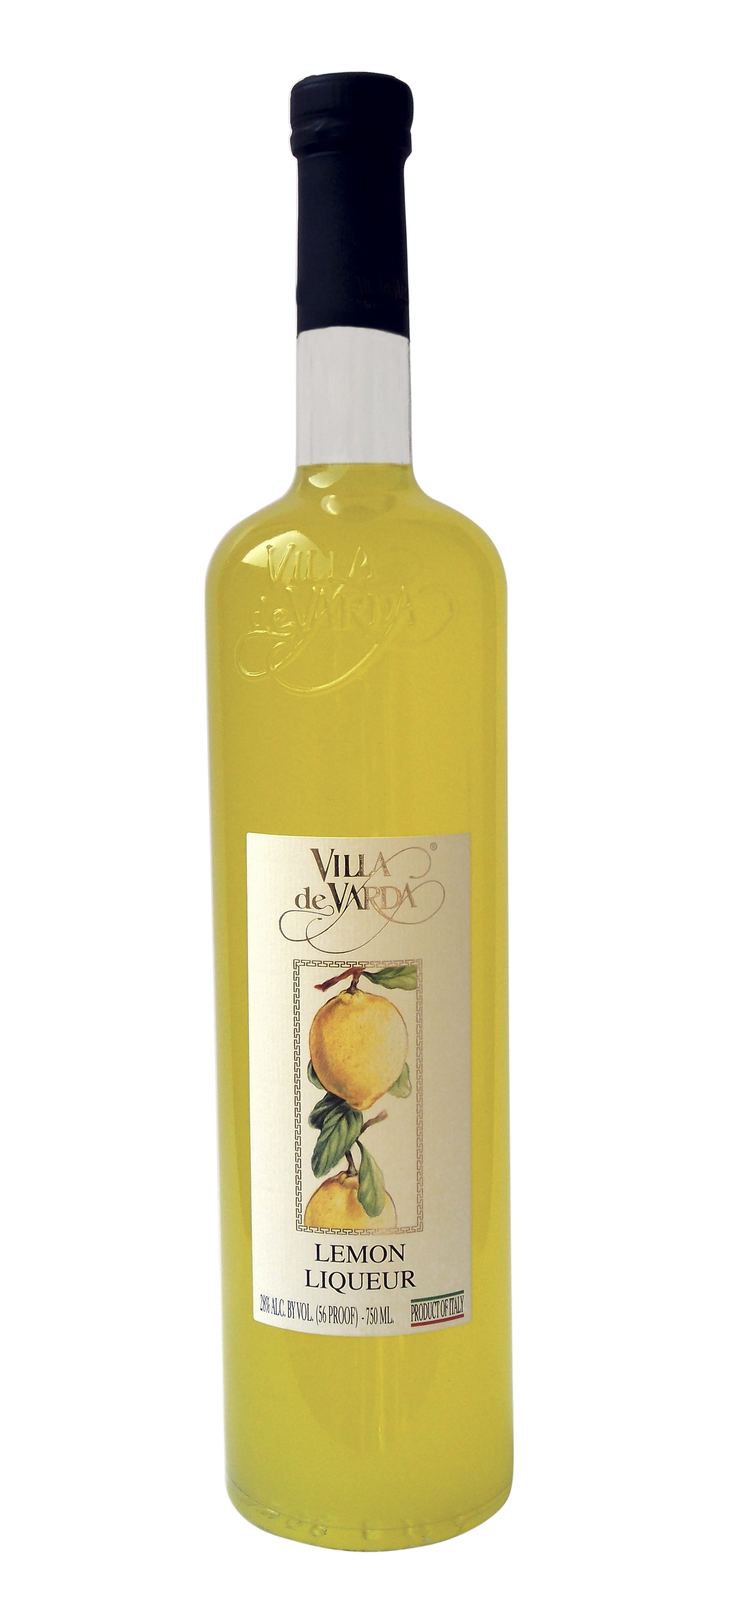 Lemon liqueur Quintessential Wines Villa de Varda Lemon Liqueur